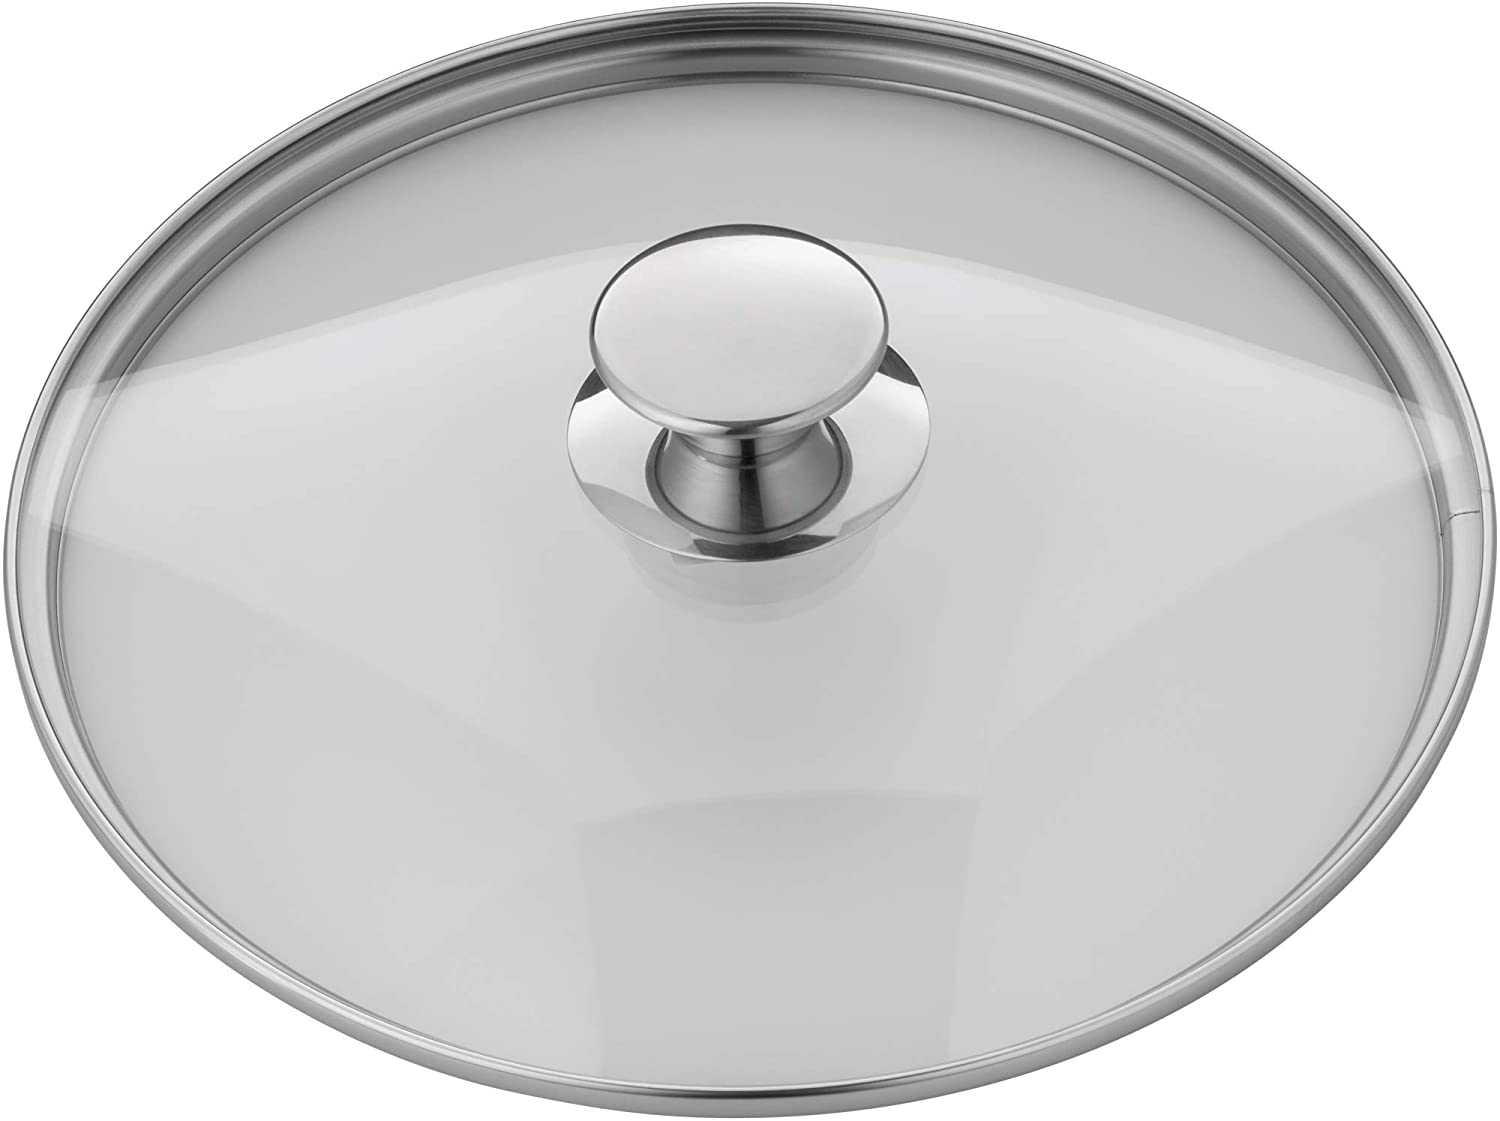 WMF glass lid, 20 cm, pot lid with metal knob, heat-resistant glass, dishwasher-safe